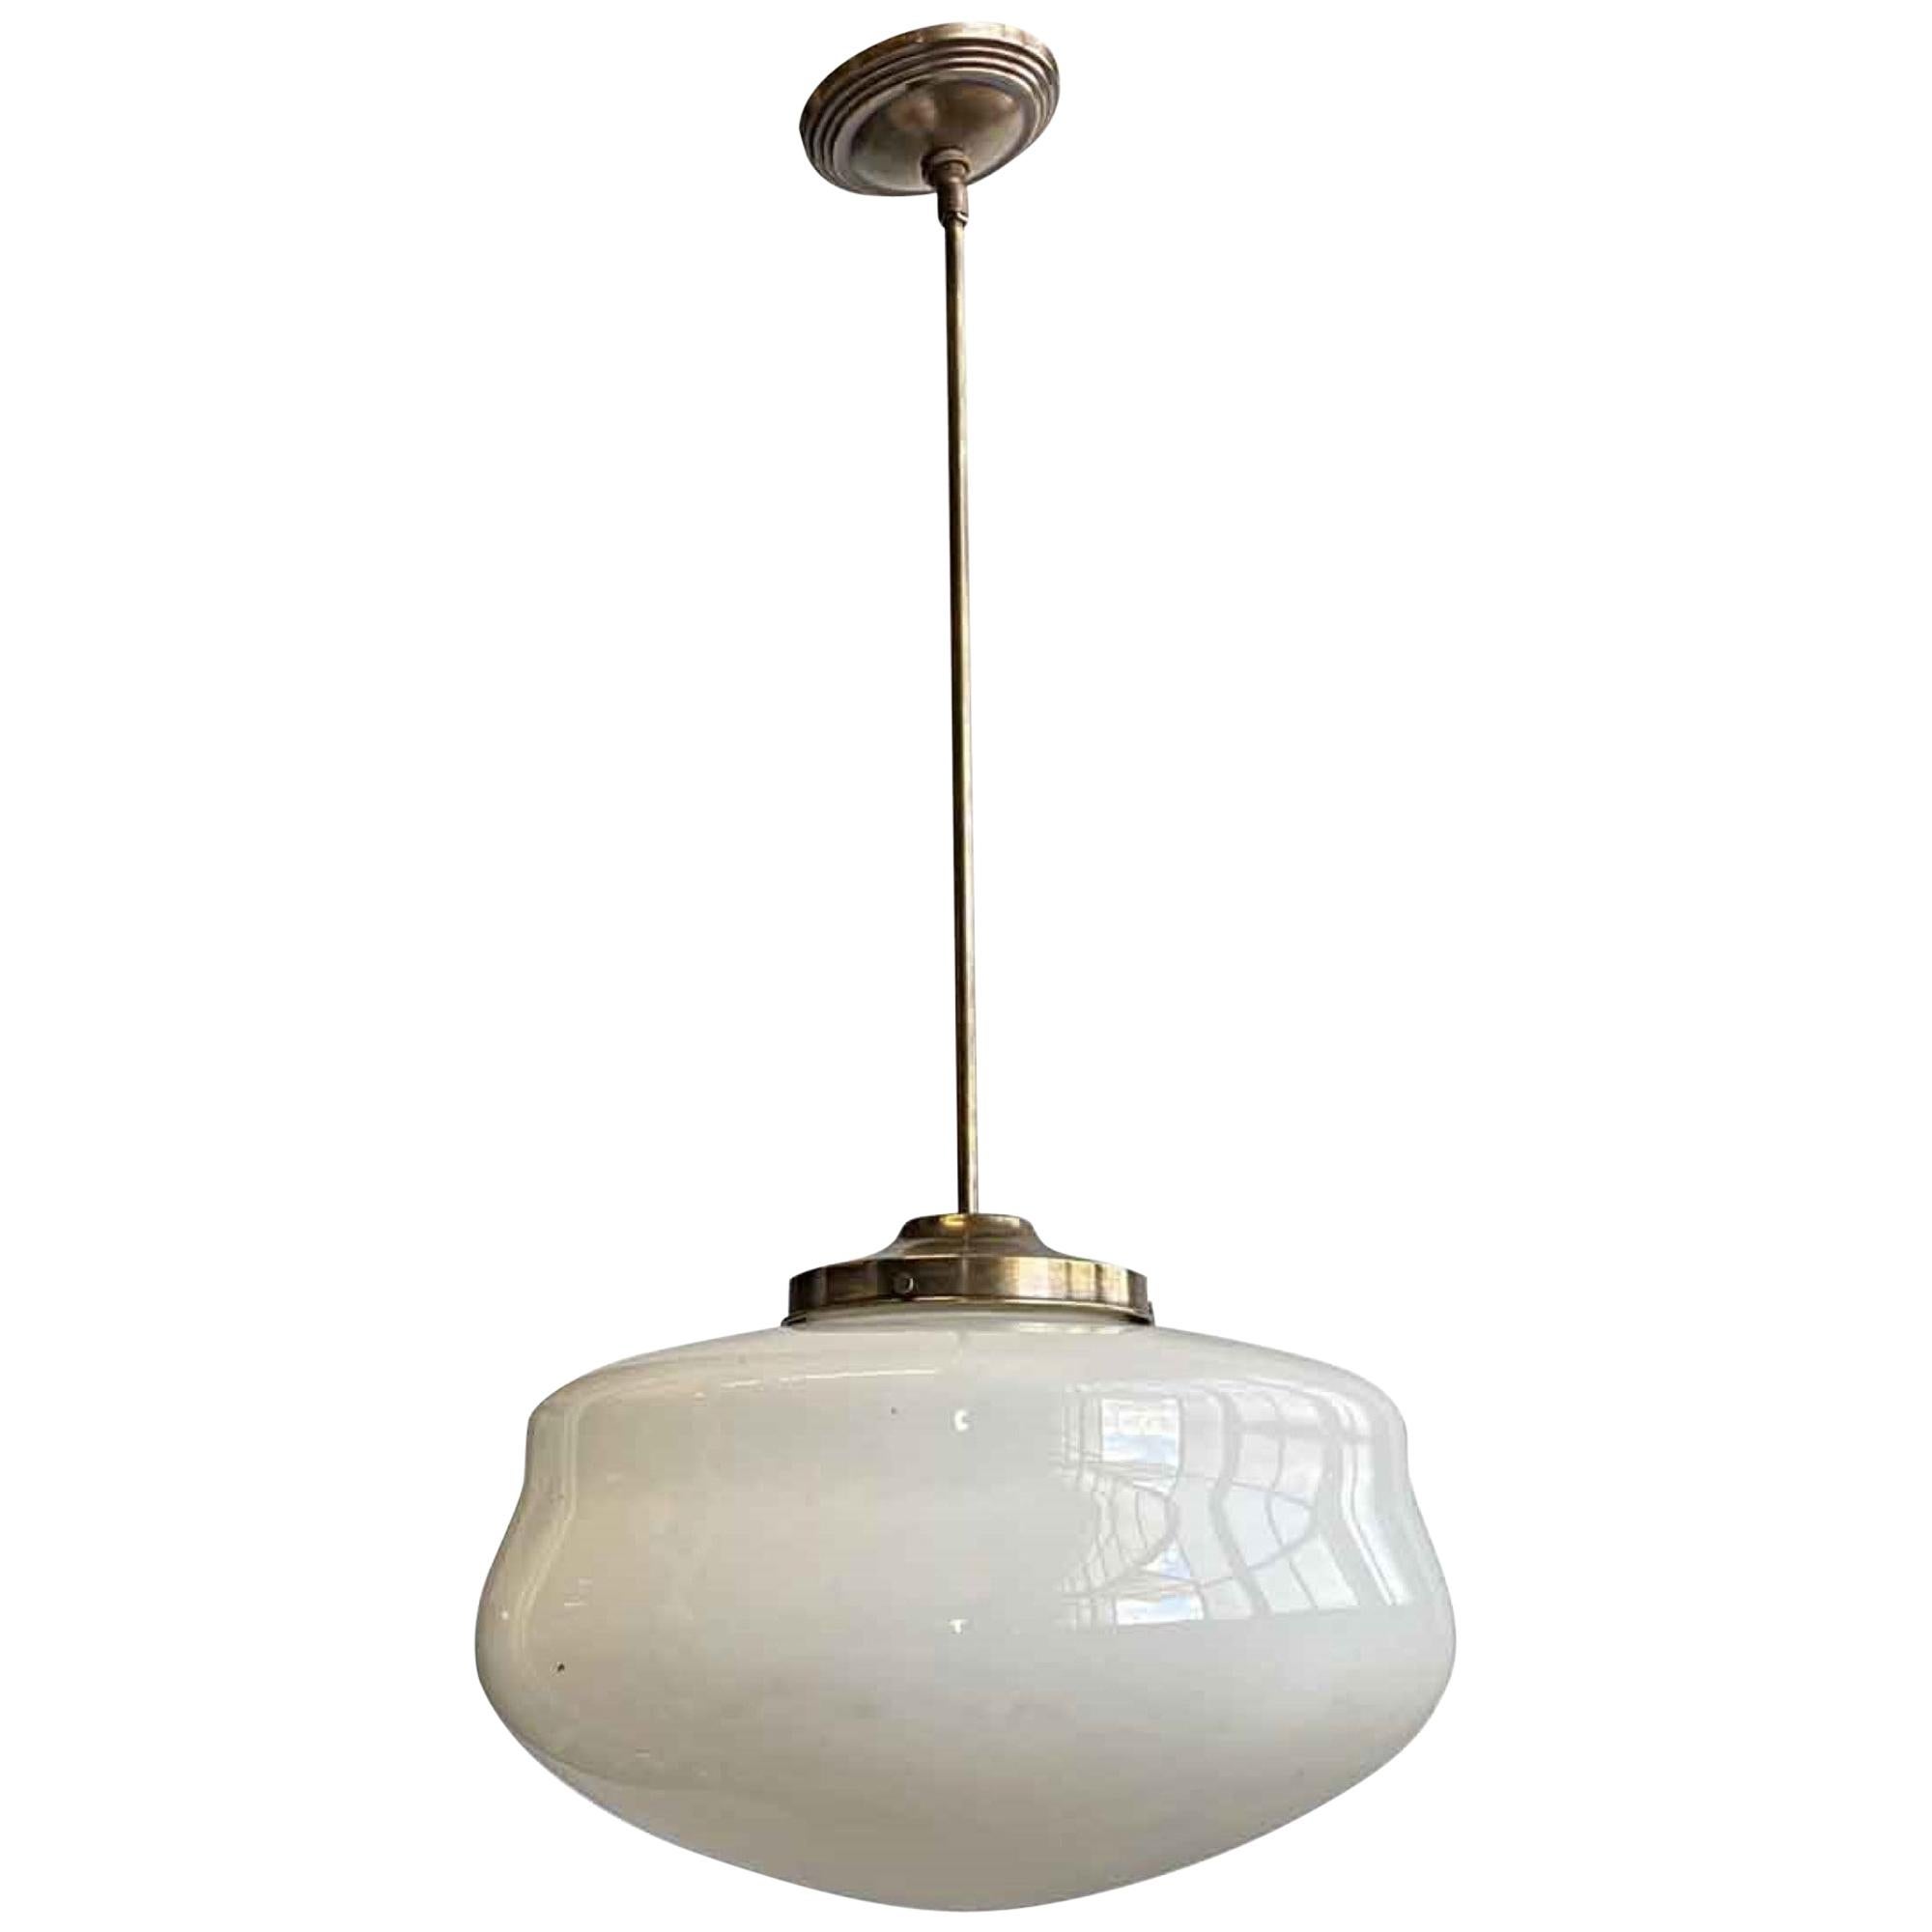 1940s Large Schoolhouse Globe Brass Pole Pendant Light with Brass Hardware